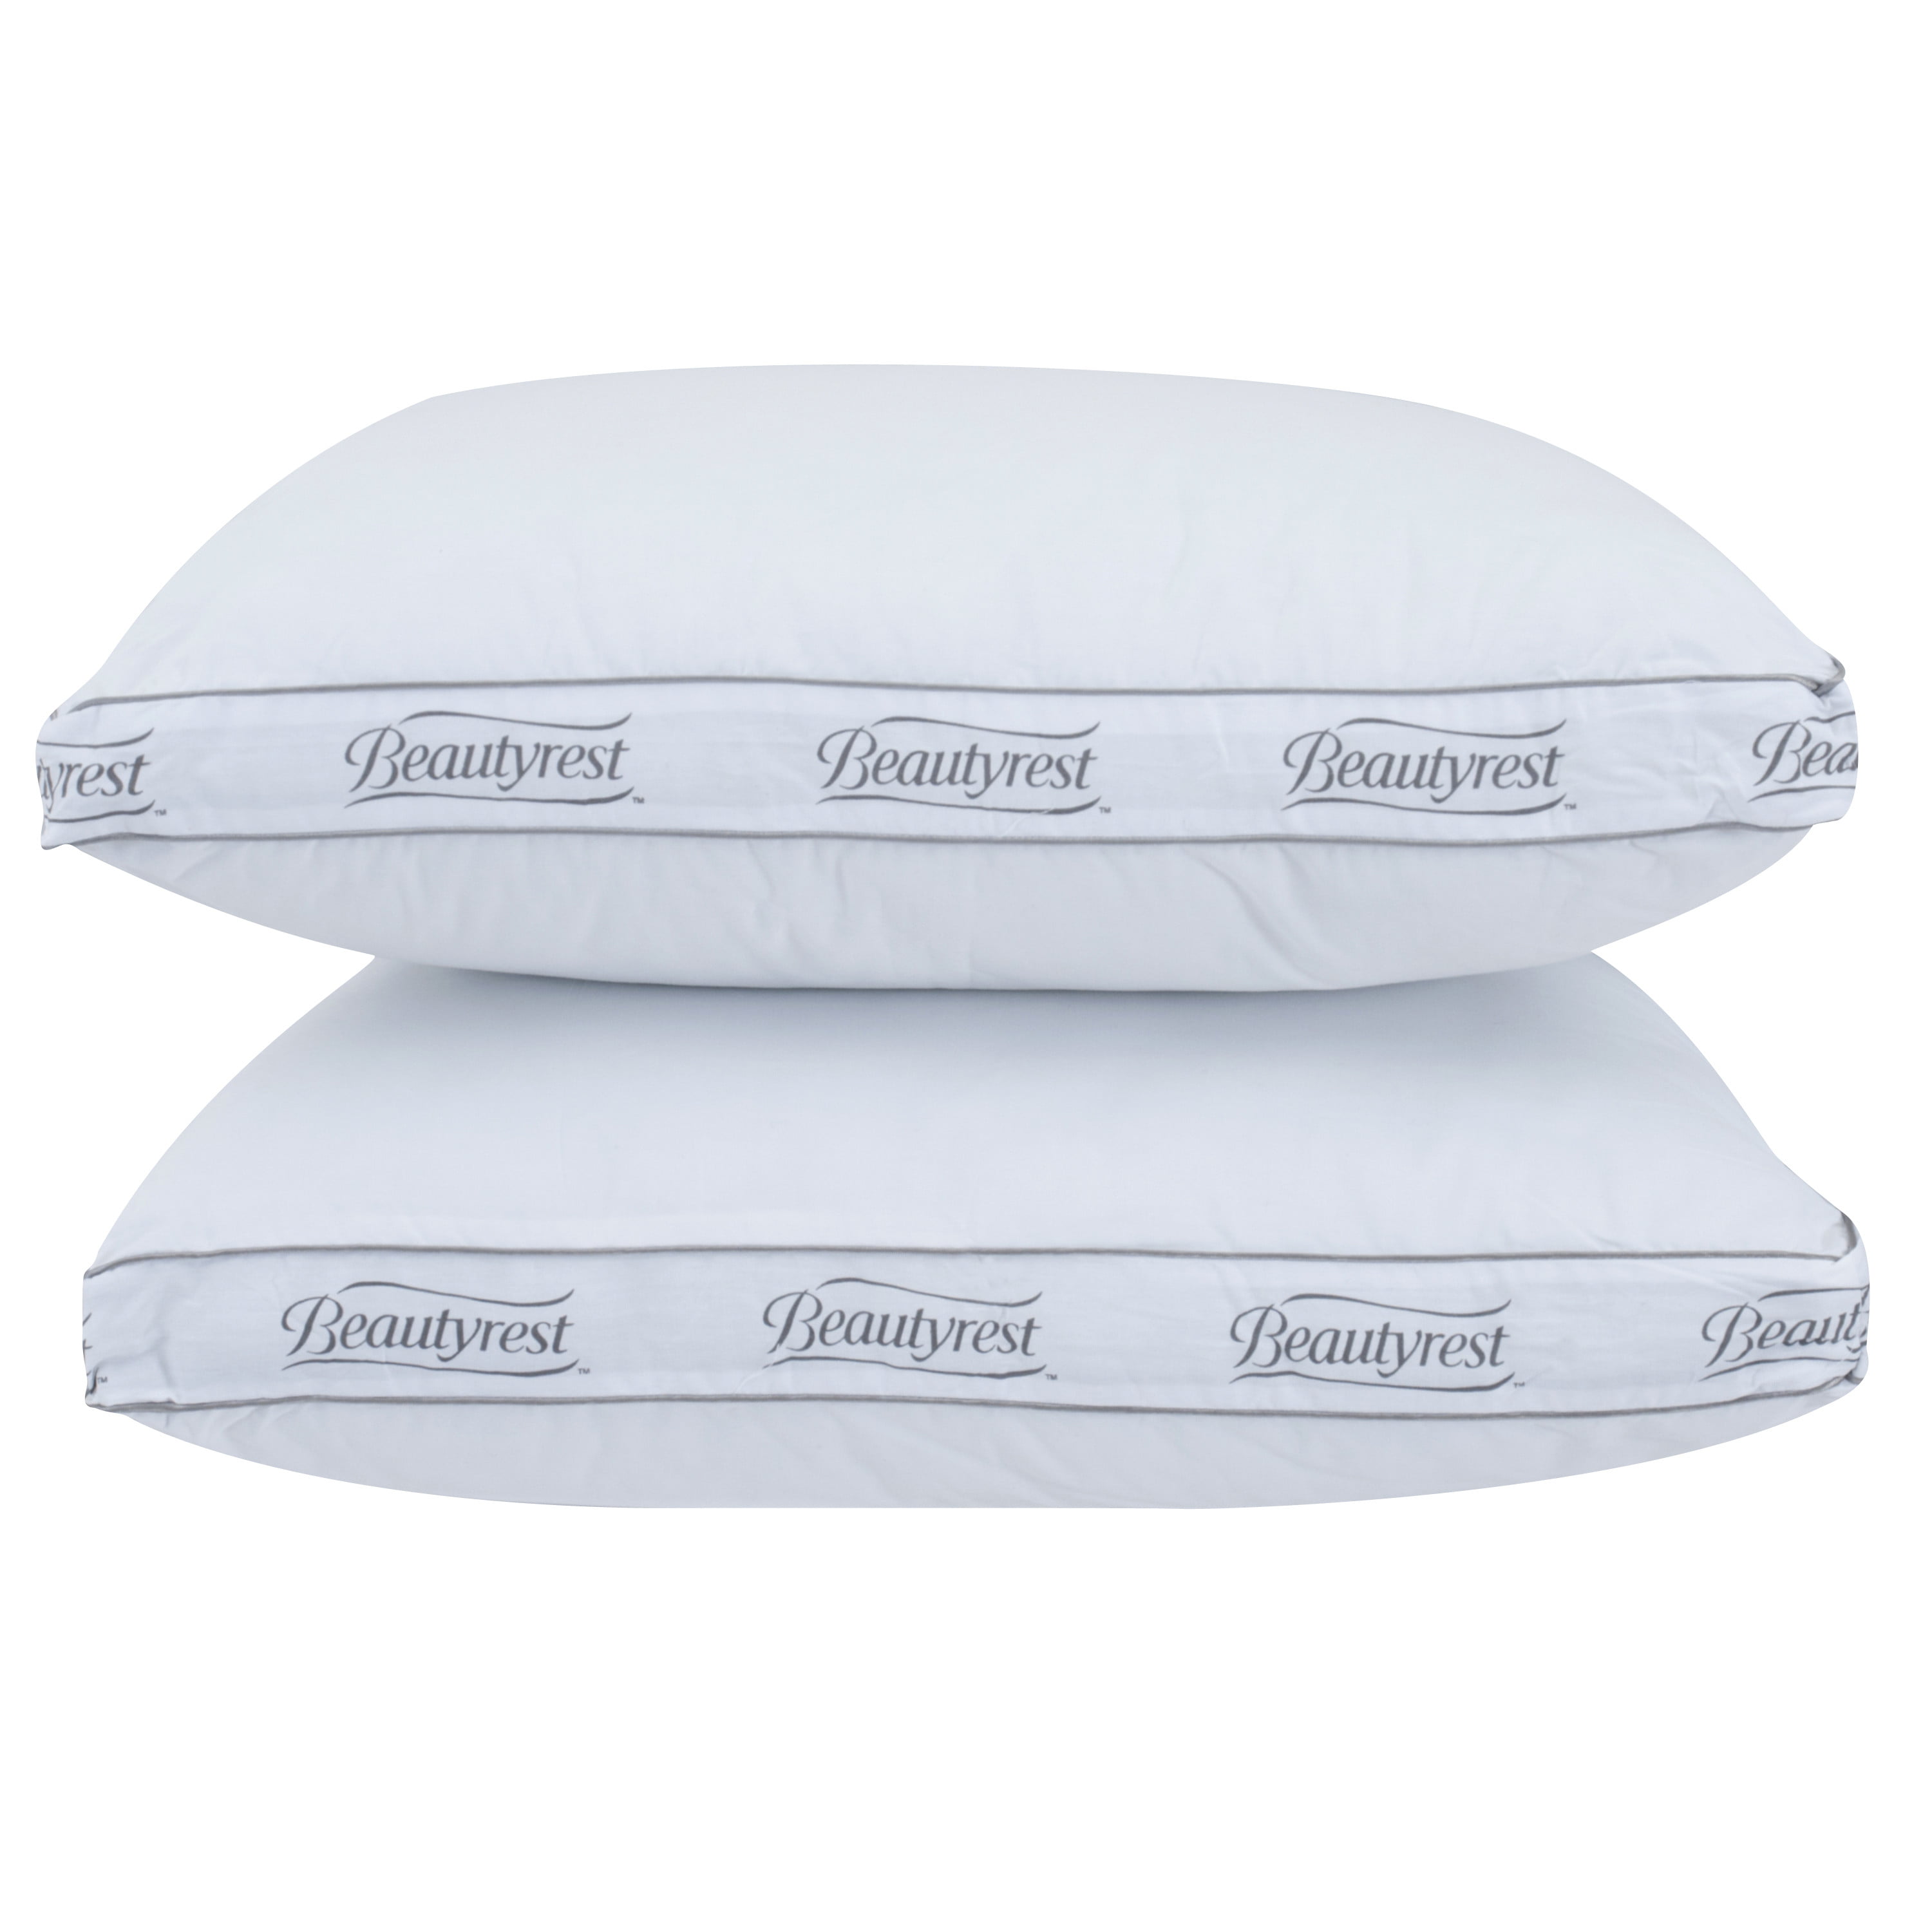 Beautyrest Luxury Power Extra Firm Pillow in Queen Size 